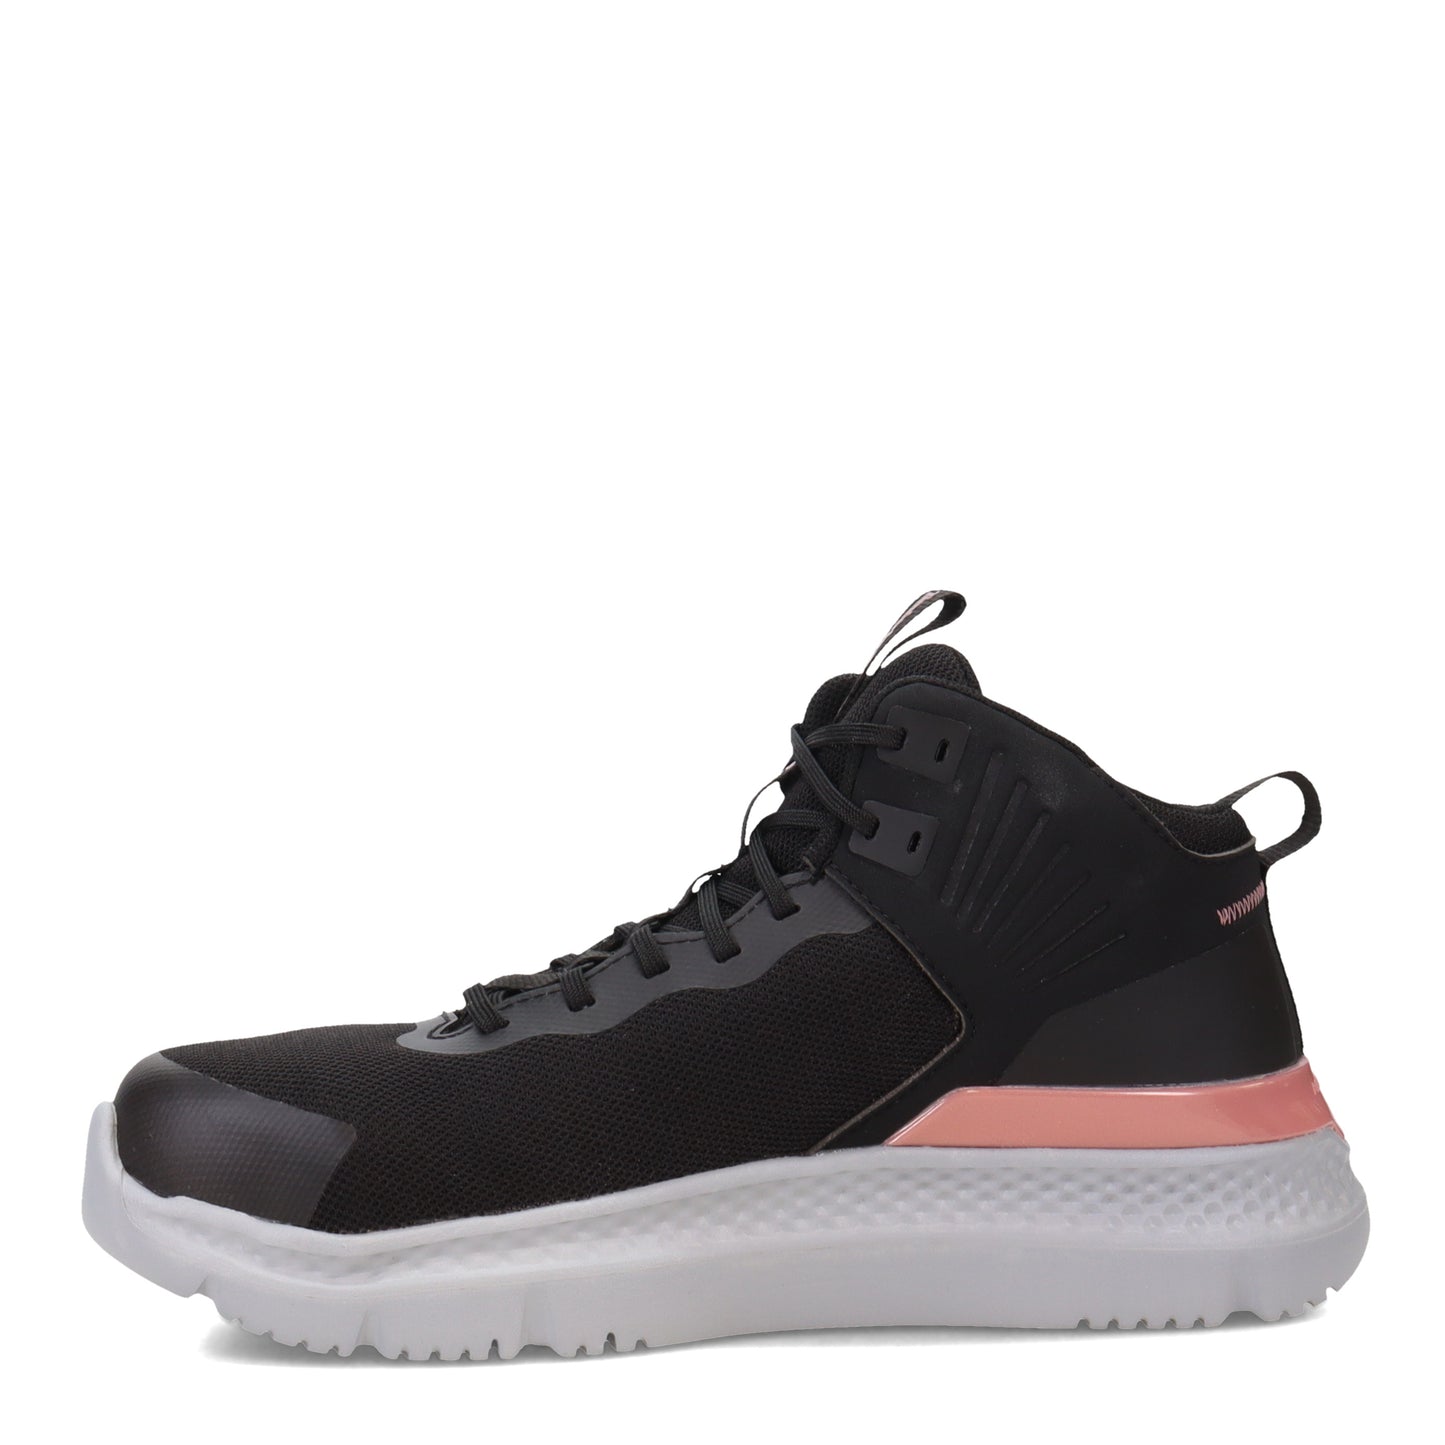 Peltz Shoes  Women's Timberland Pro Setra Mid Comp Toe Work Boot Black/Rose TB0A5UVU001